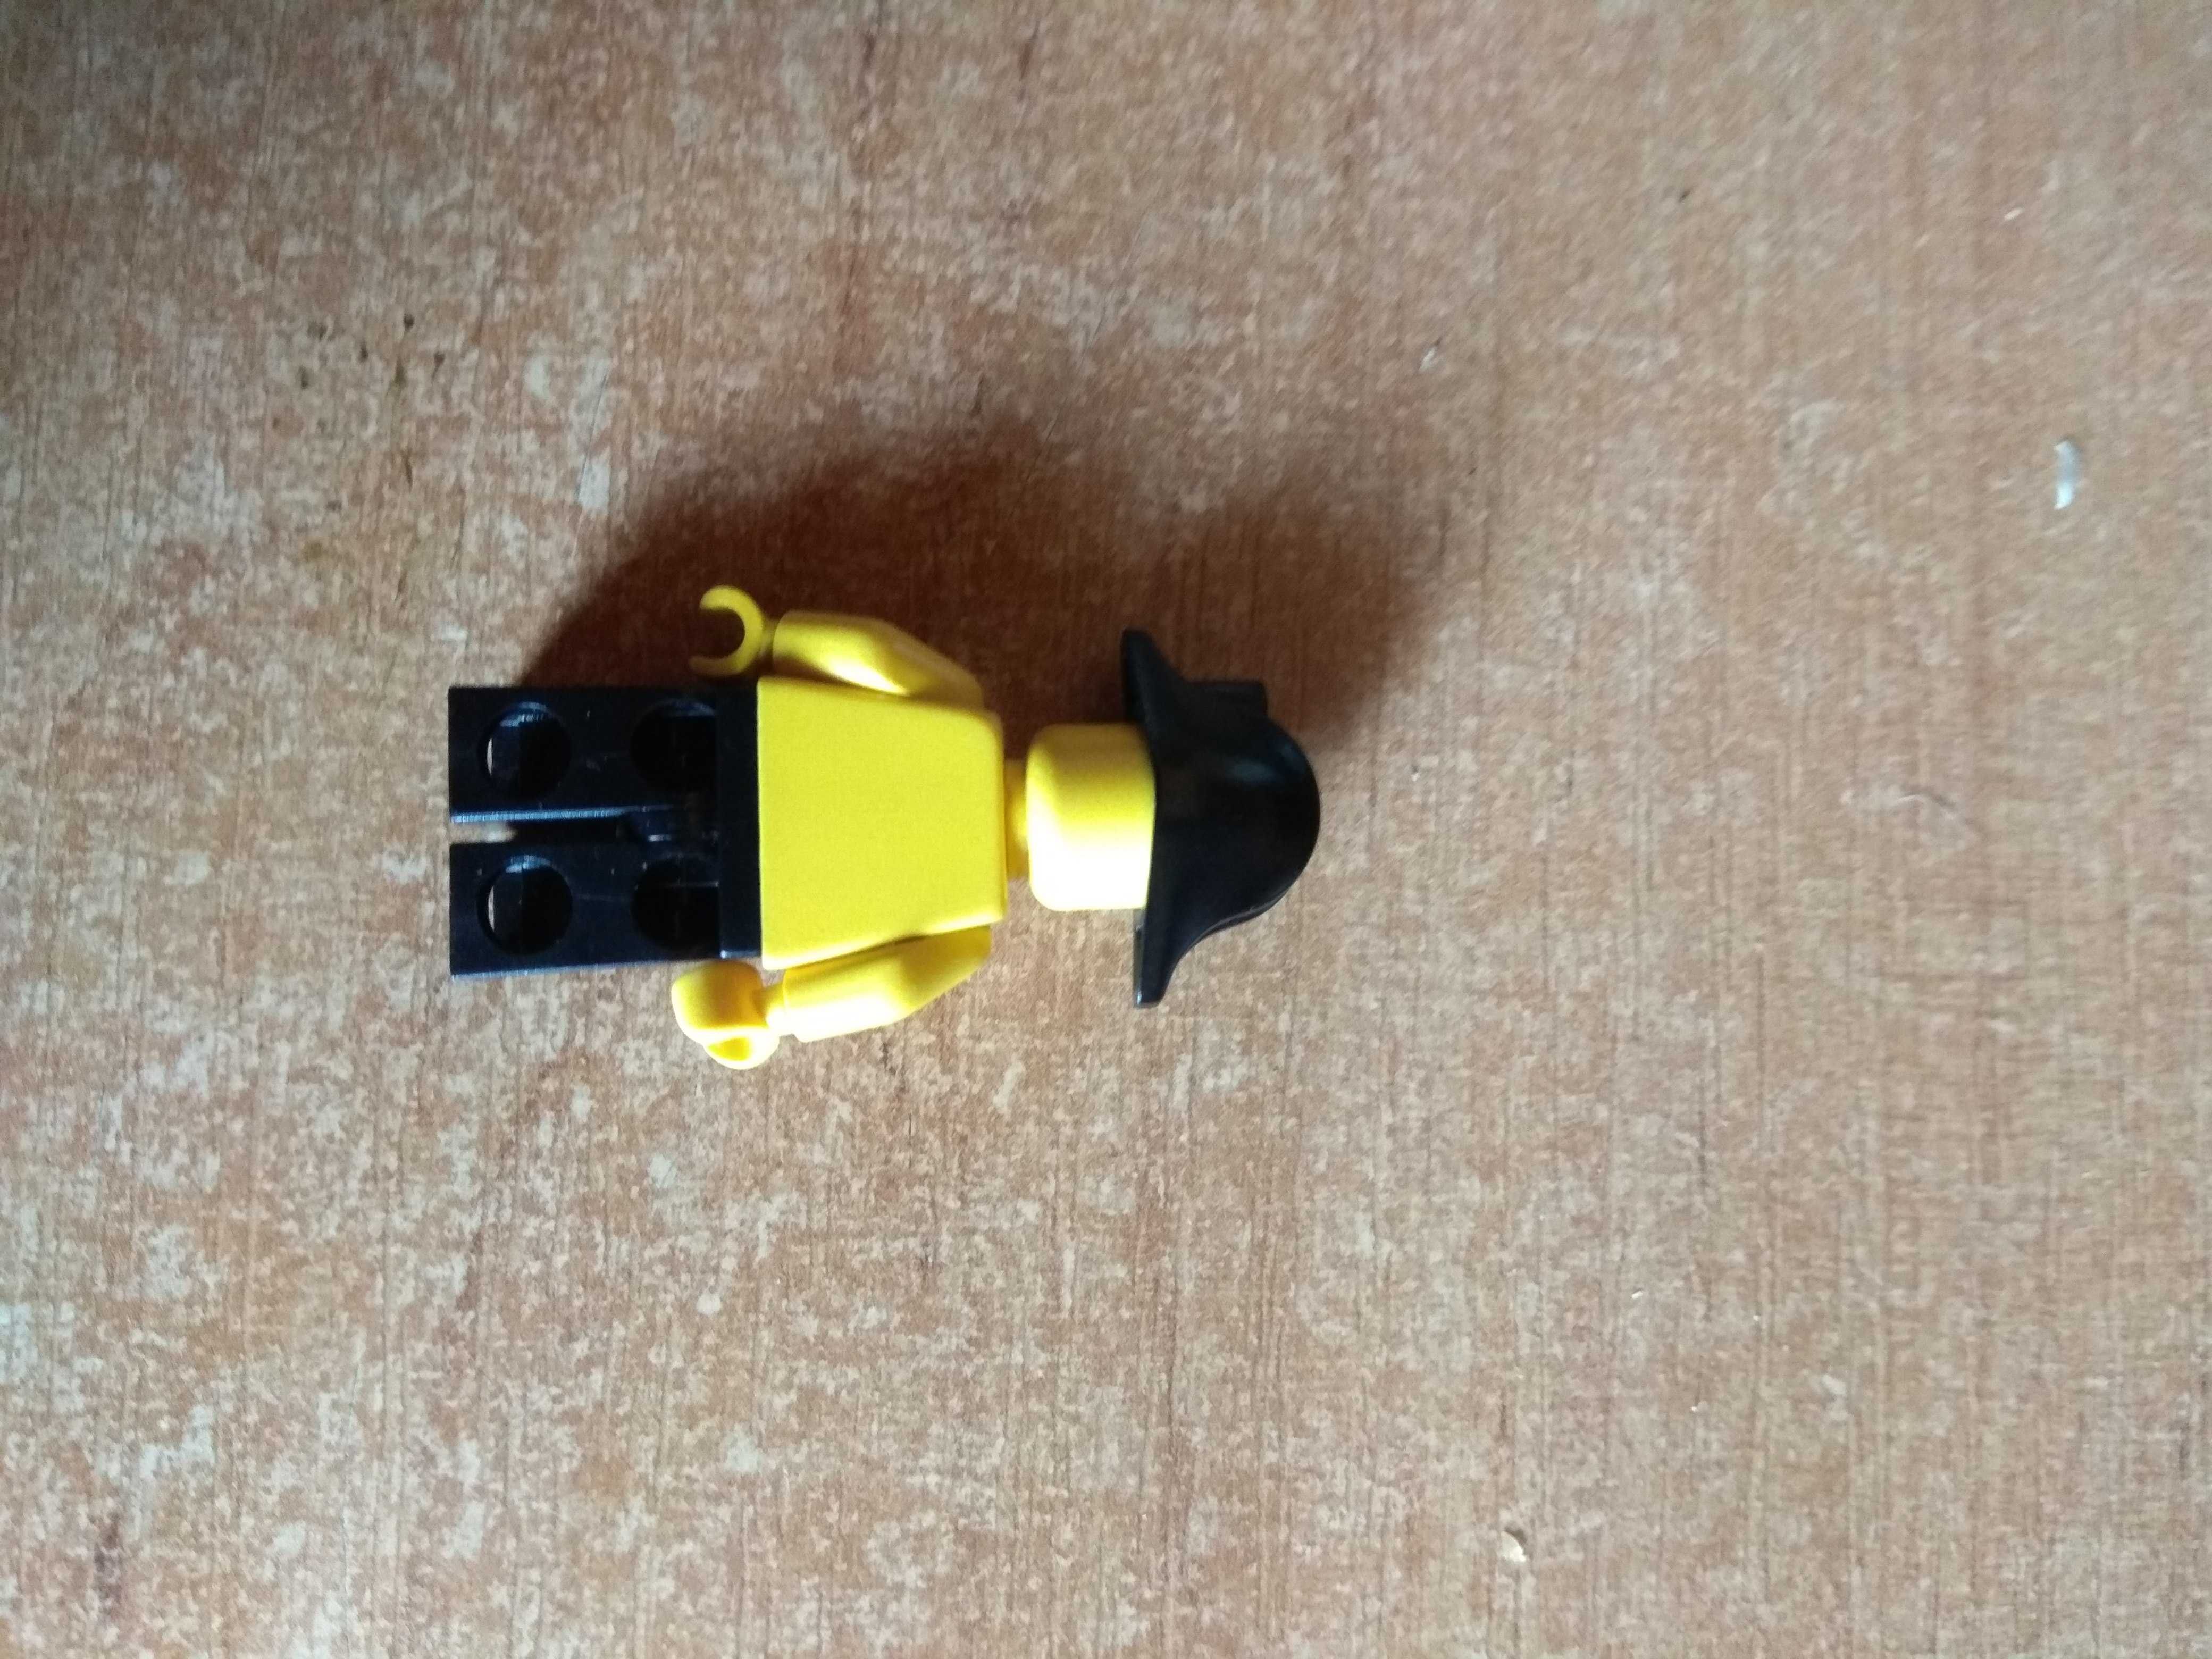 LEGO Piraci Pirates kapitan pi078 rzadko spotykany 6261 i 6268